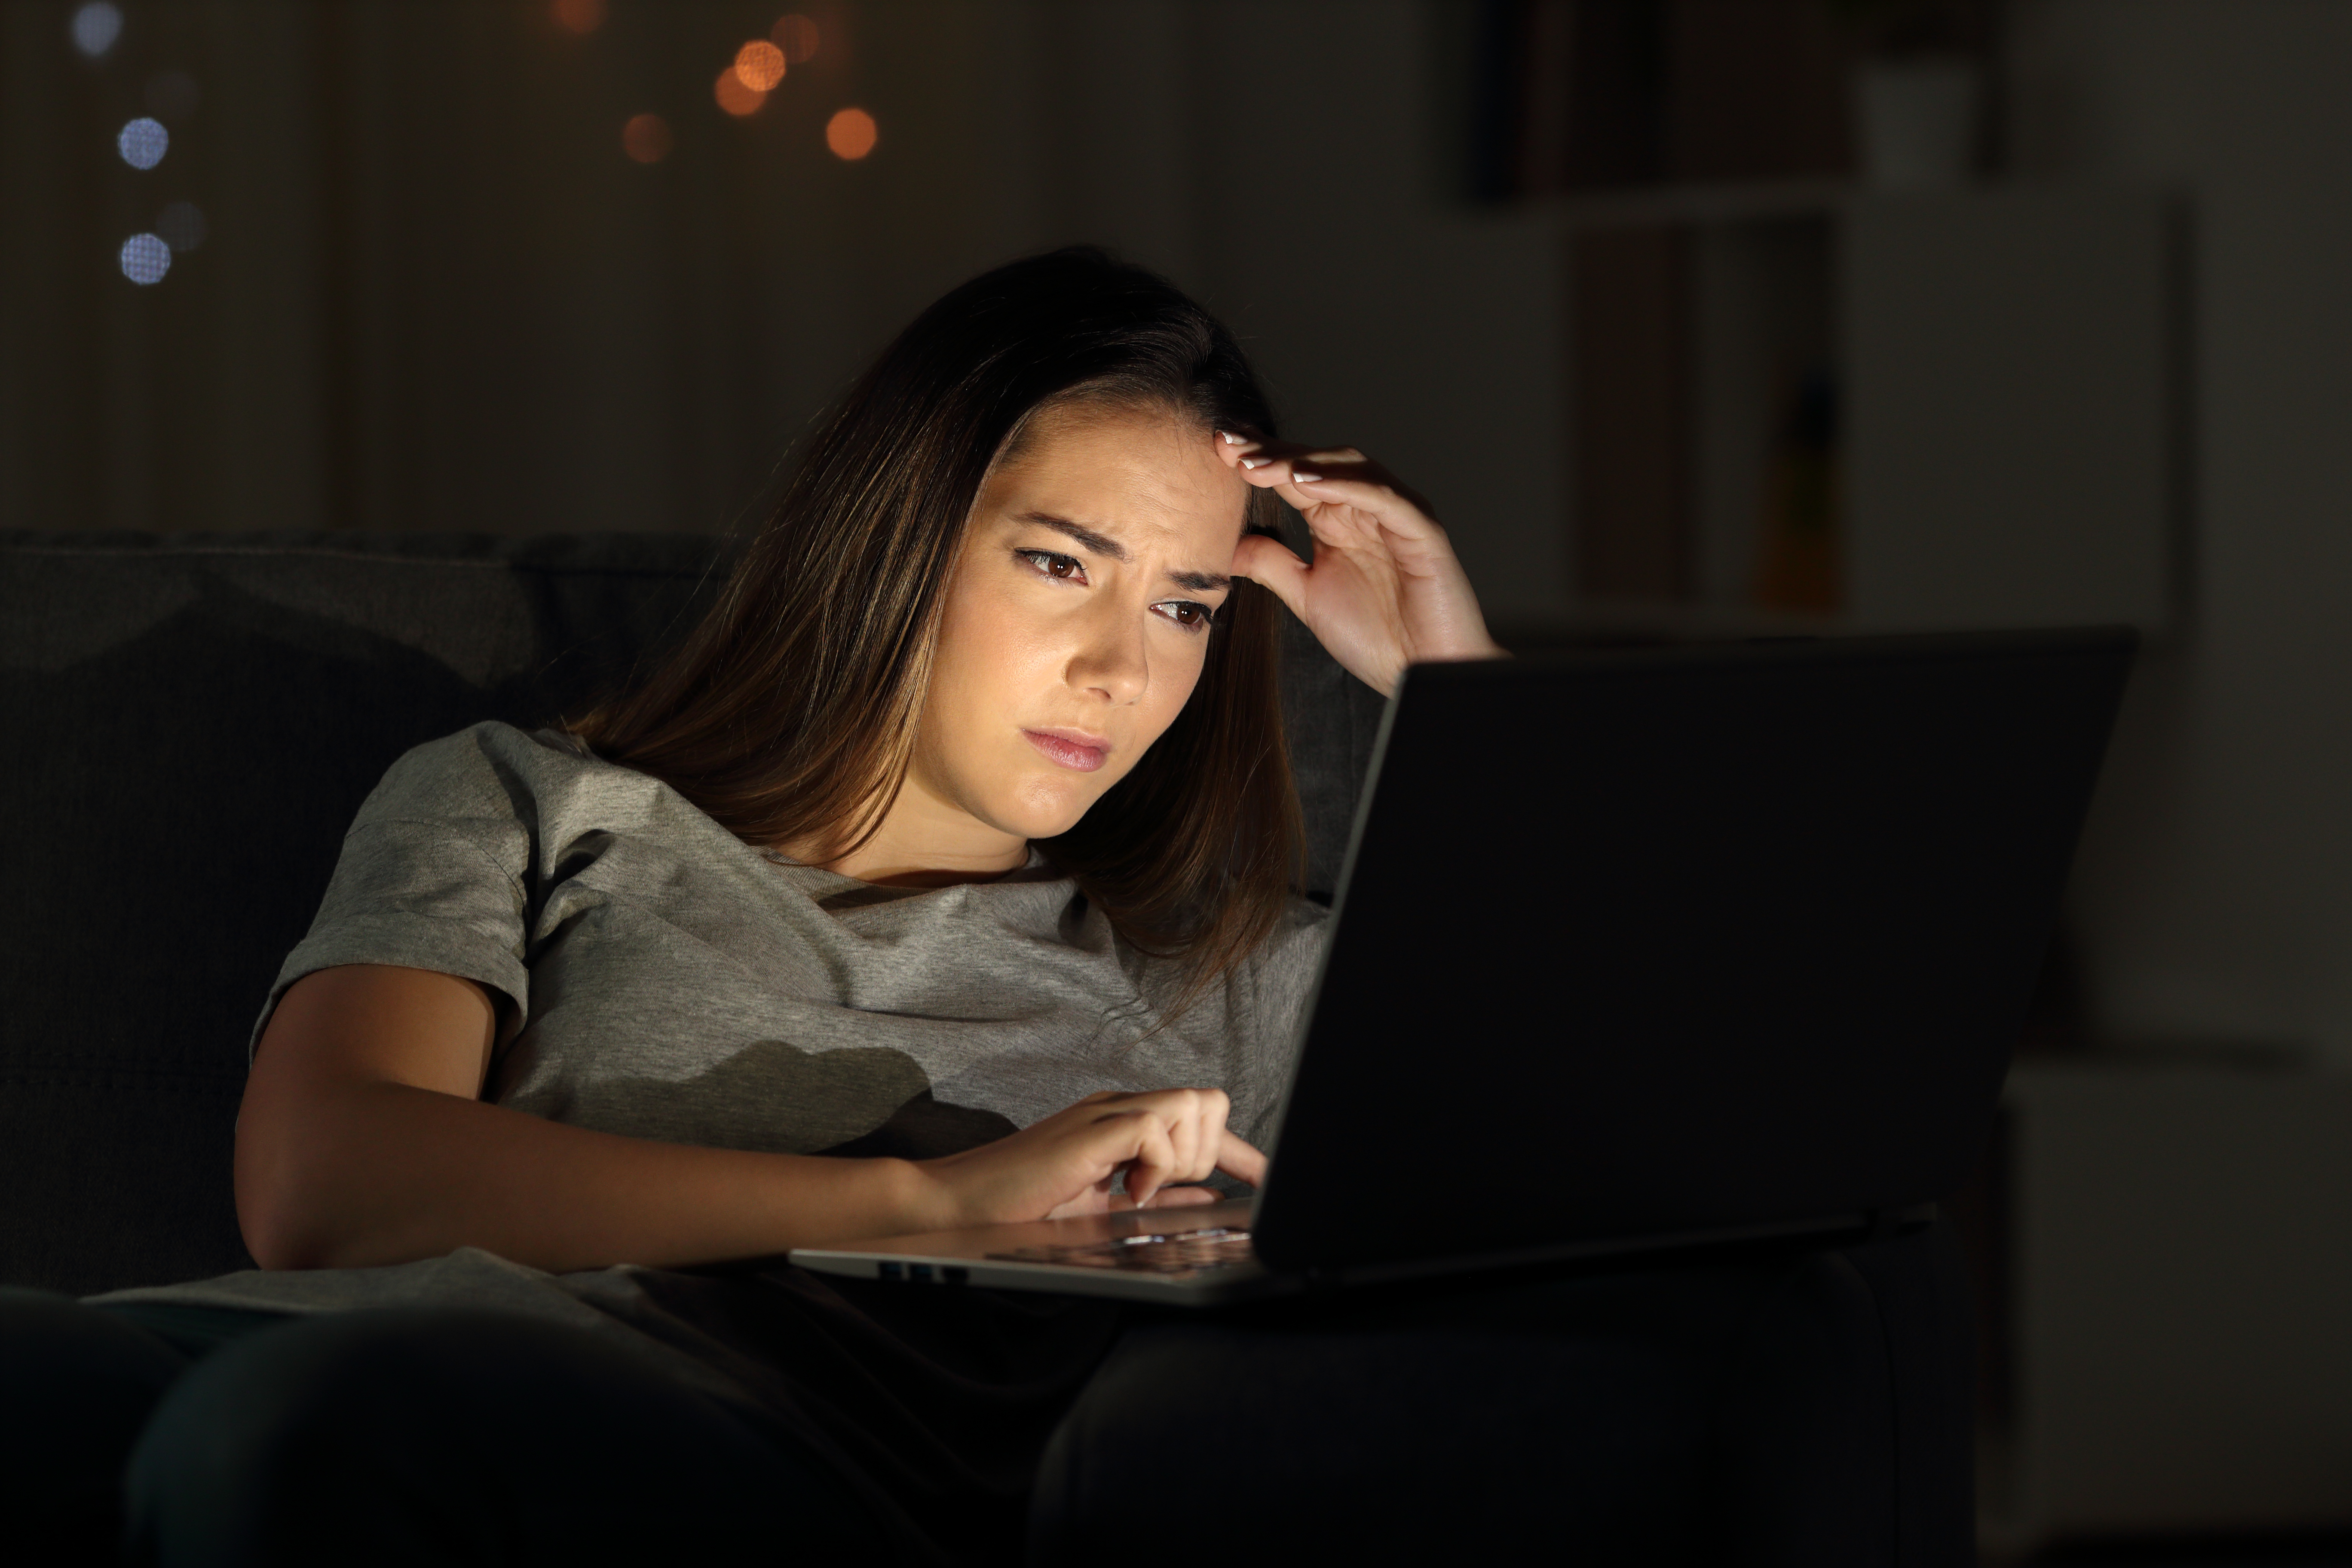 A worried woman using her laptop | Source: Shutterstock